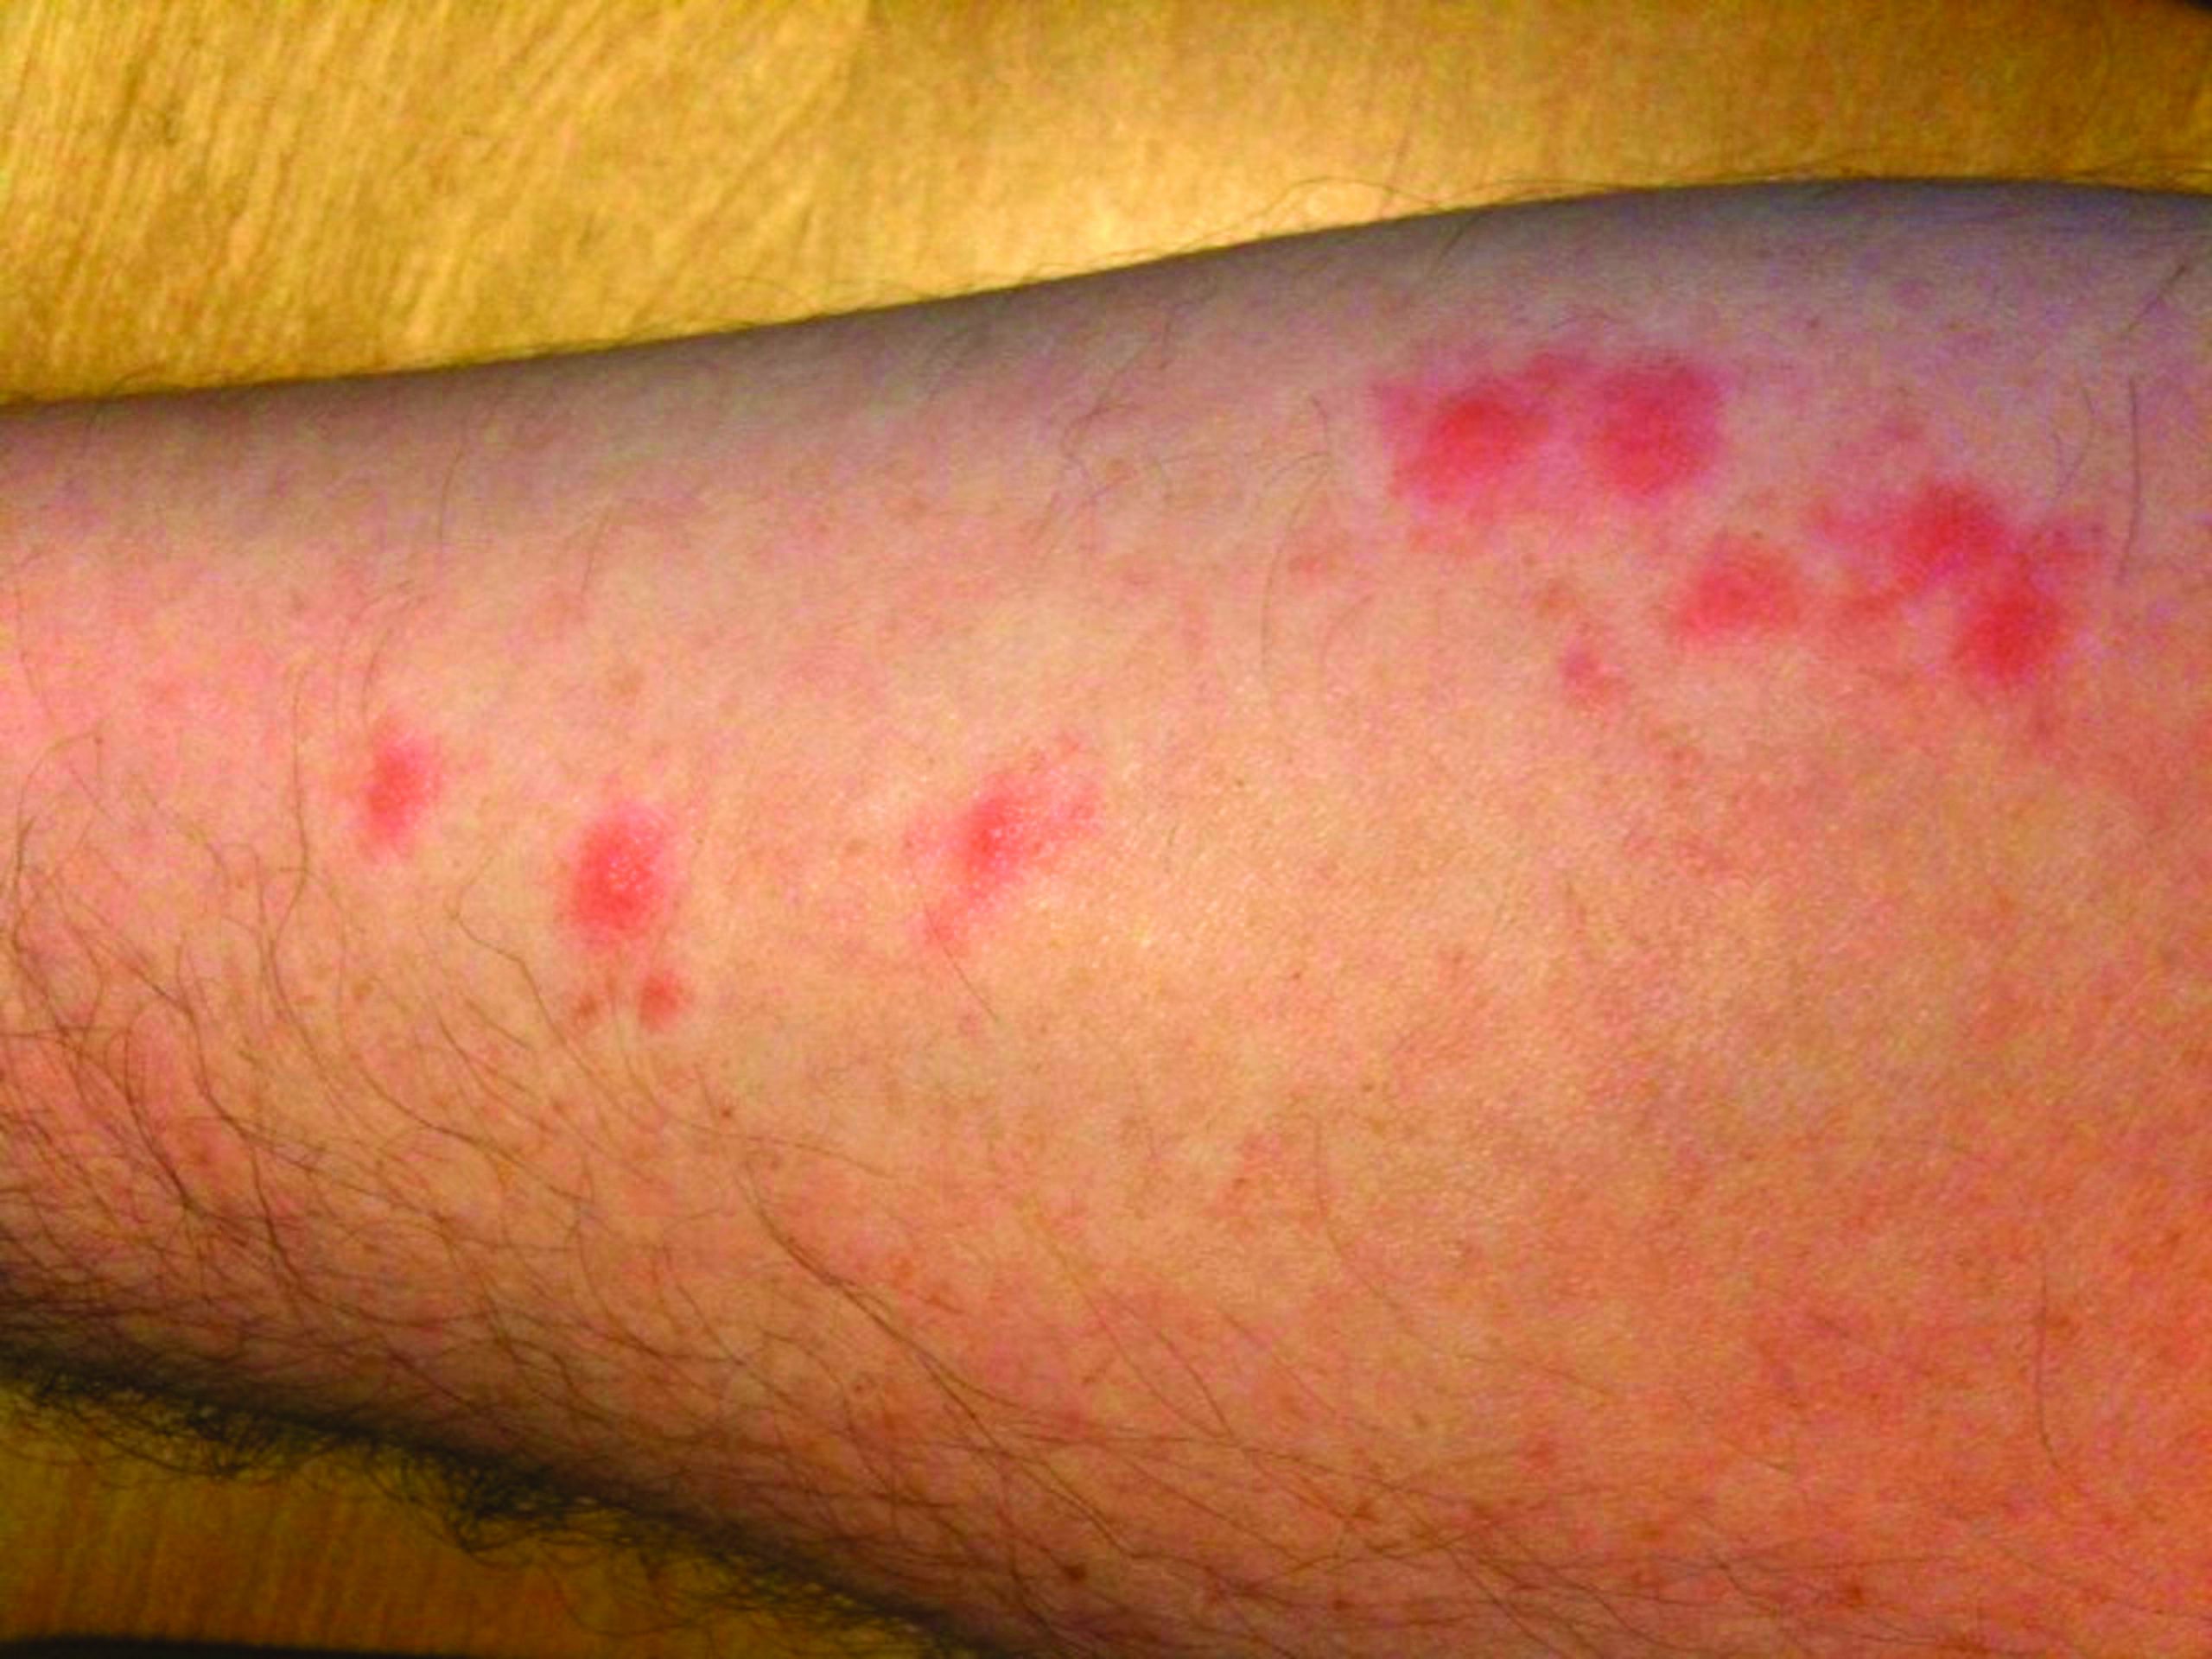 bed bug bites on a leg